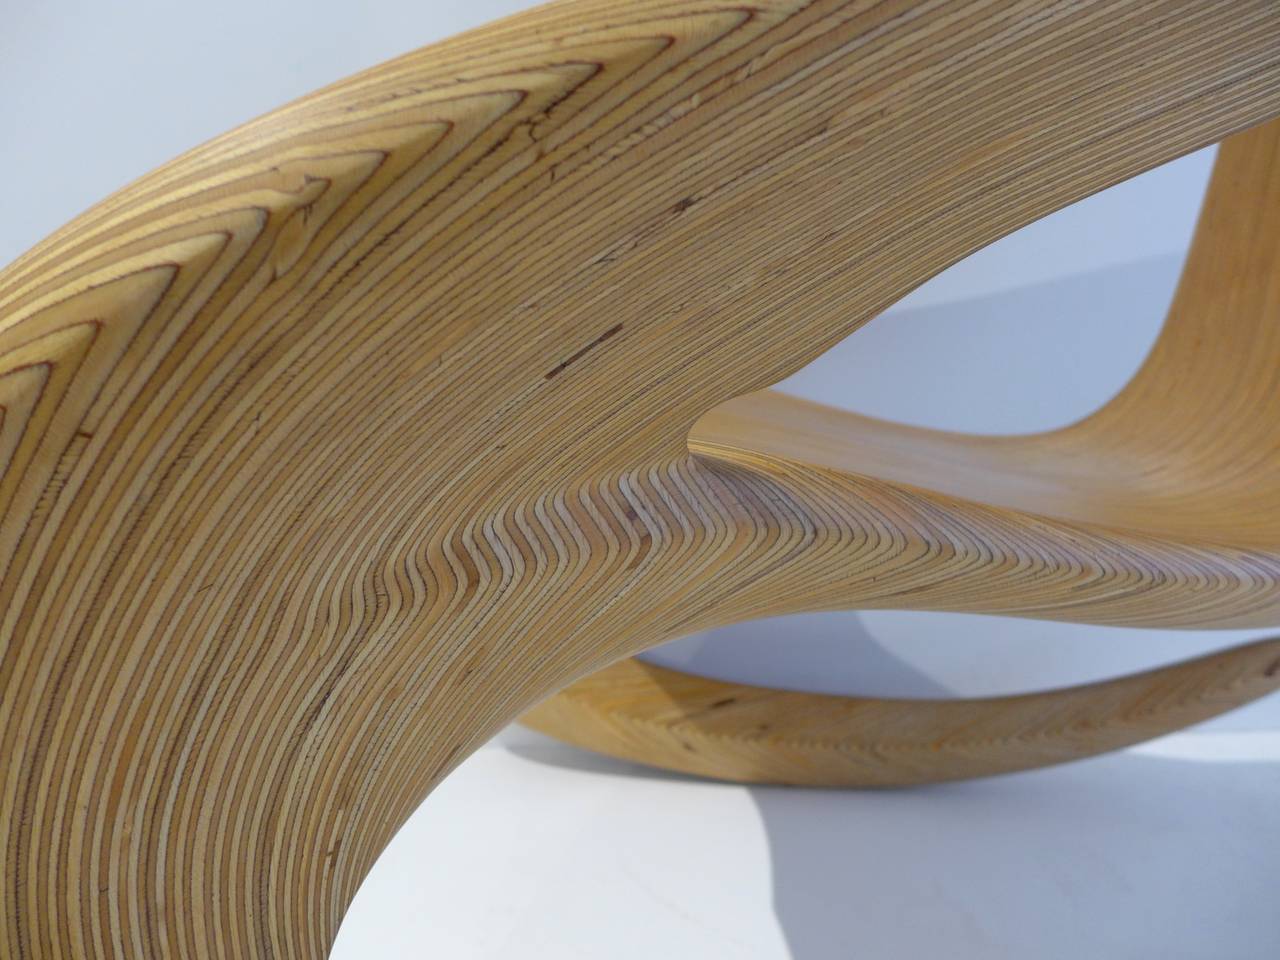 Birch Sculptural Craft Rocking Chair by Carl Gromoll